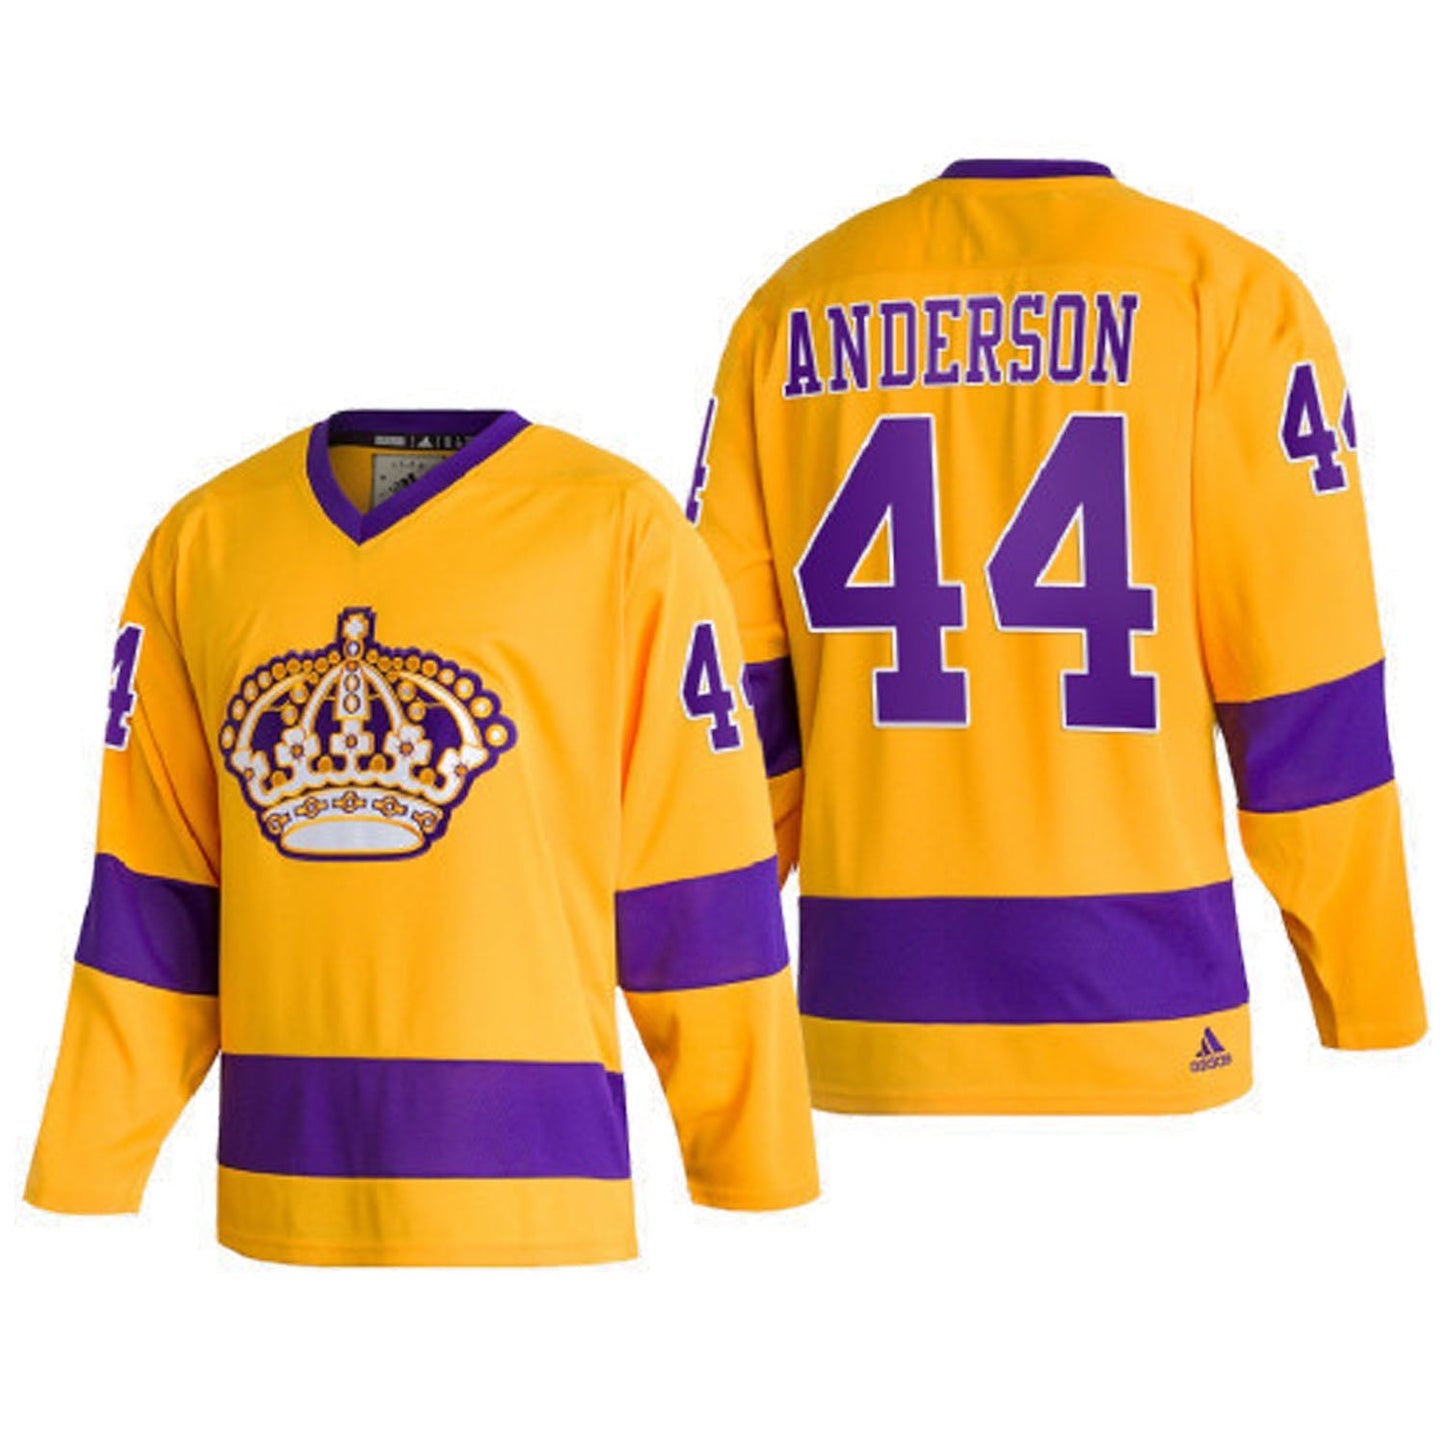 NHL Mikey Anderson La Kings 44 Jersey